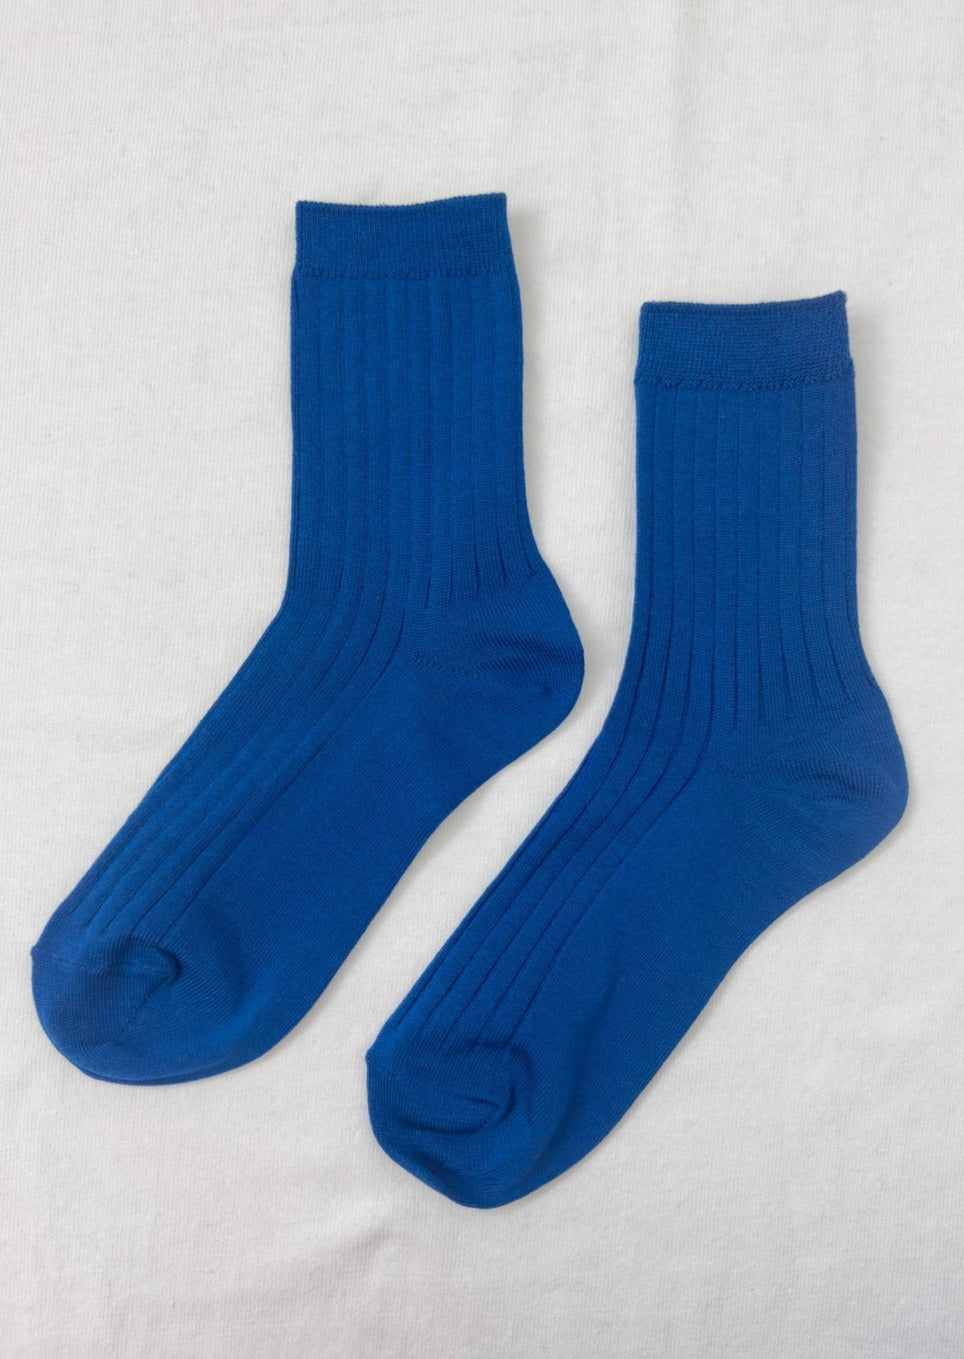 Her Socks, Cobalt Blue